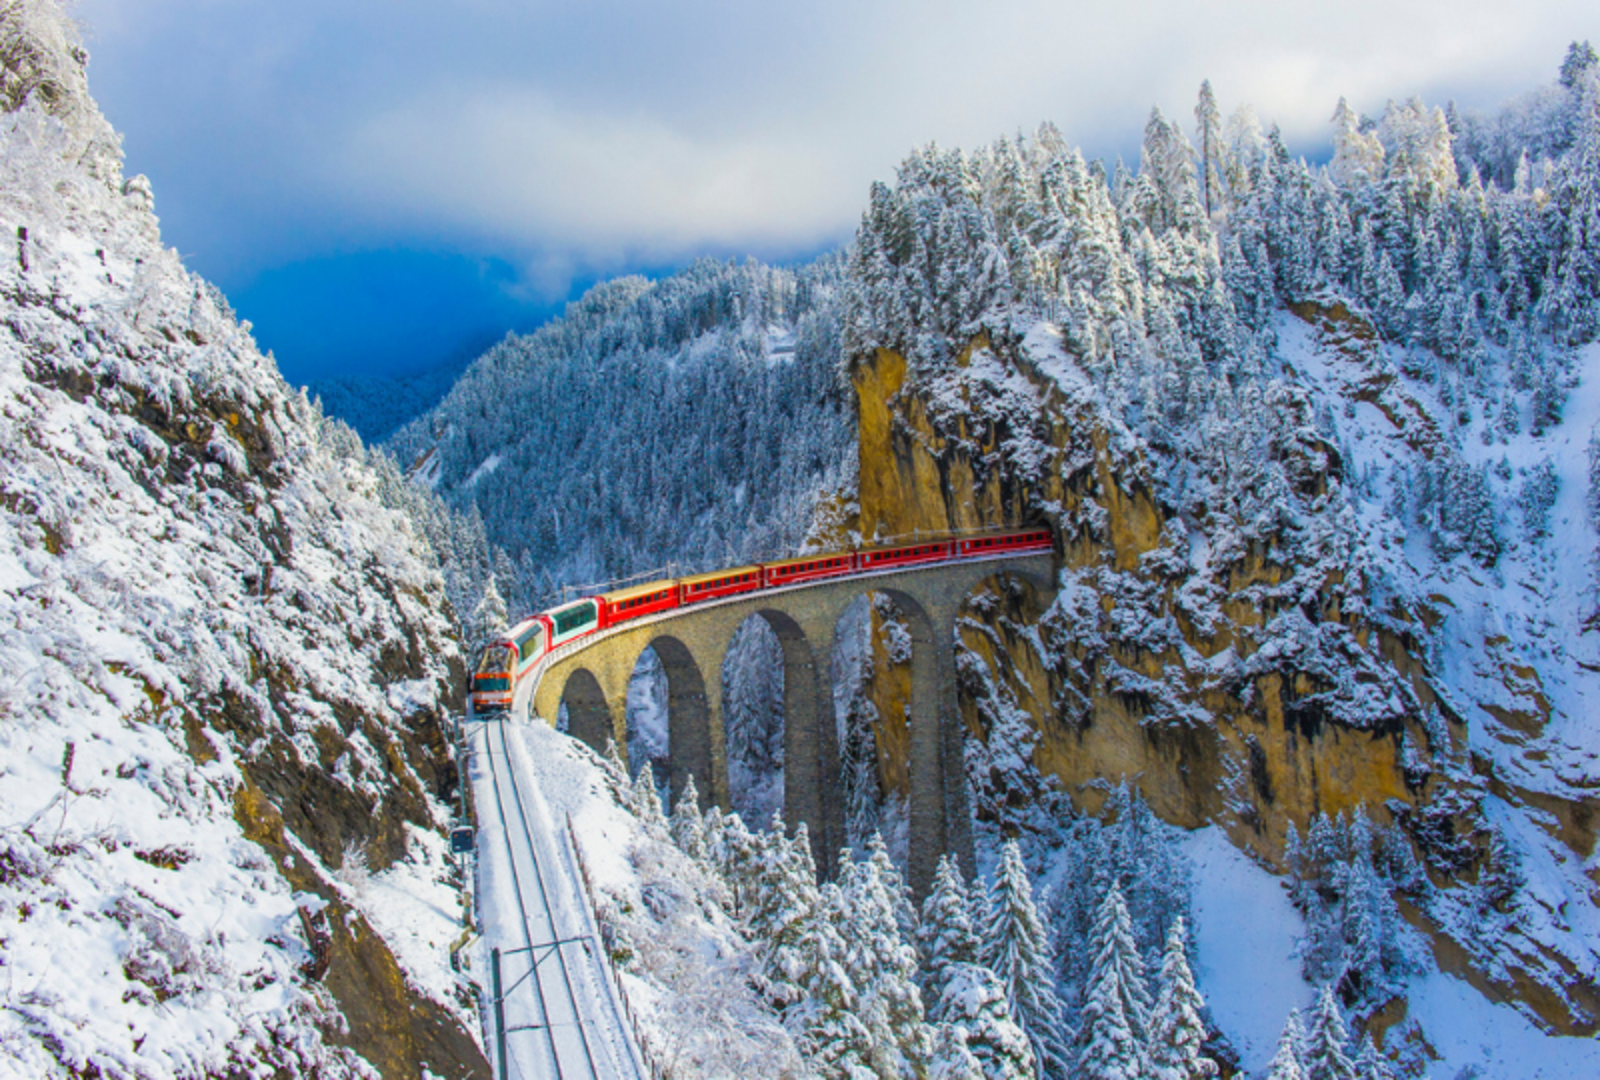 Train above tall bridge in snowy mountain landscape in europe